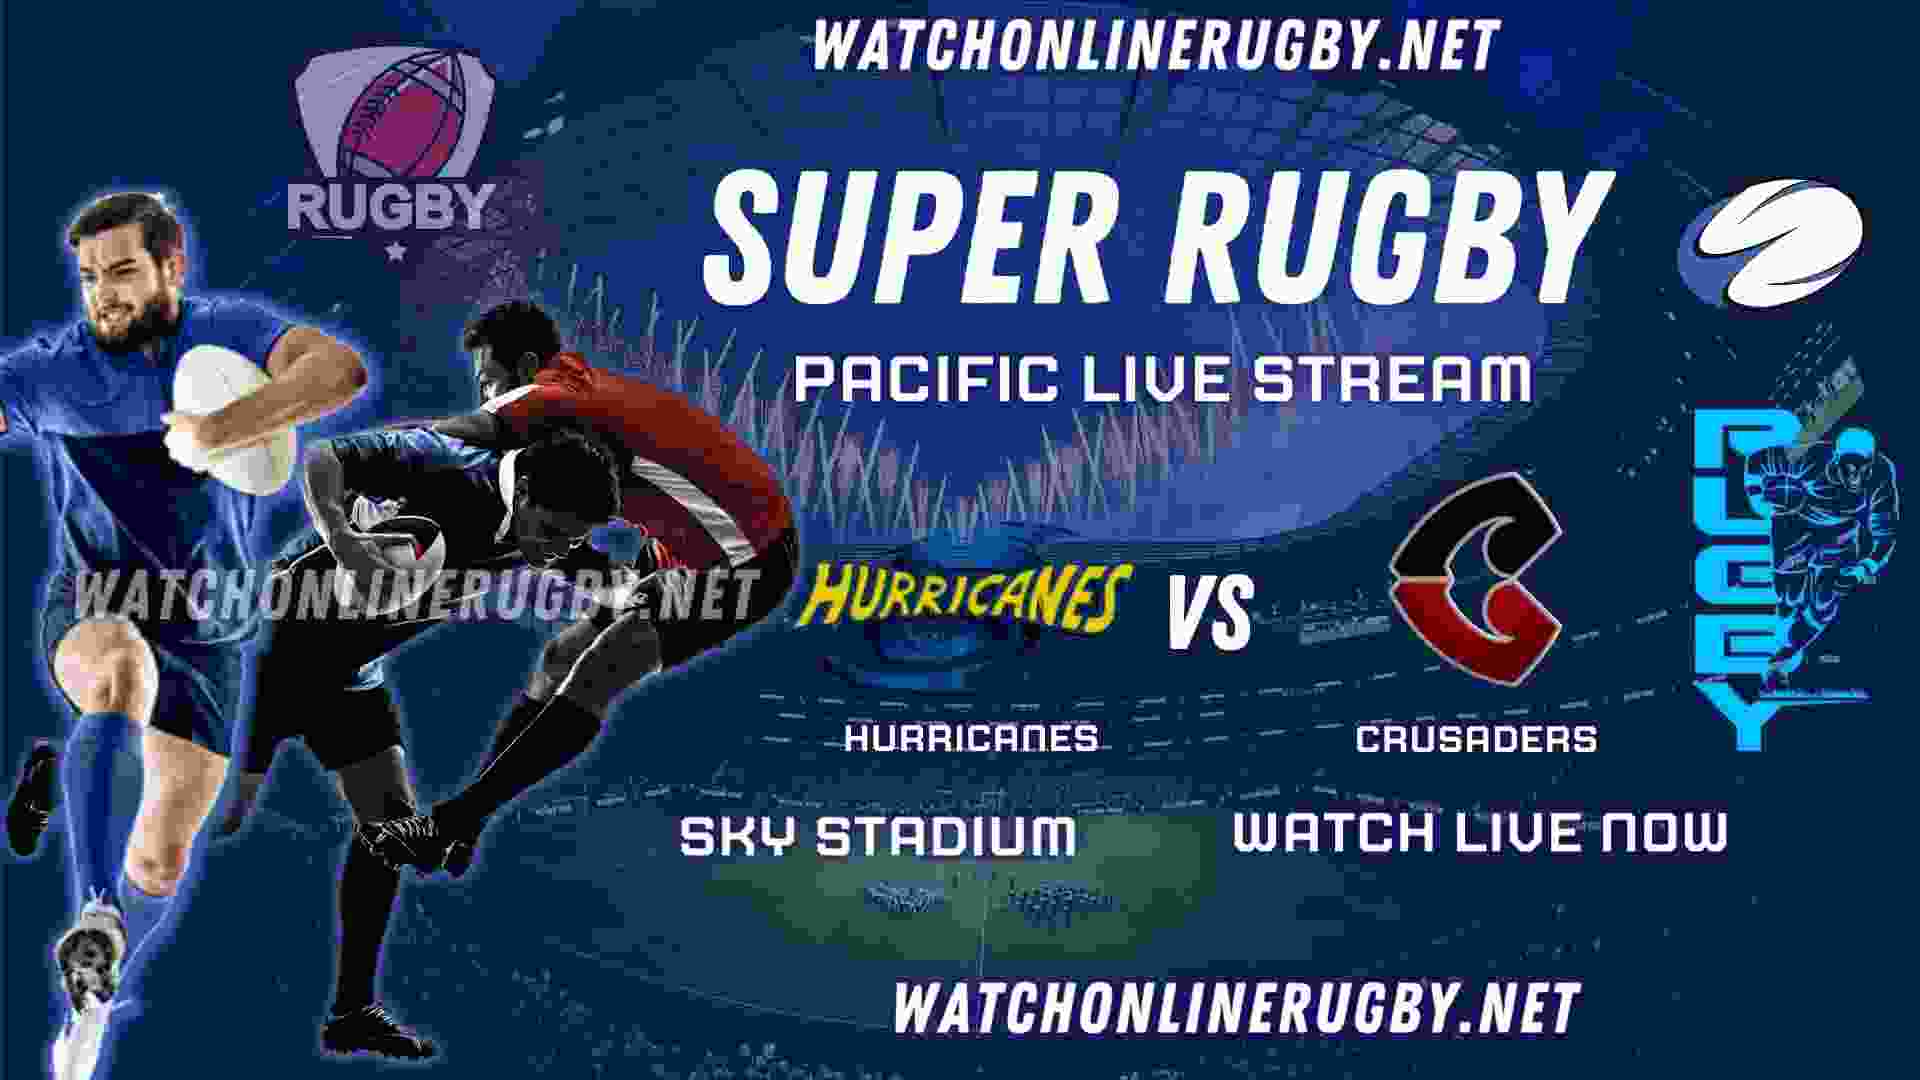 Live Rugby Crusaders vs Hurricanes